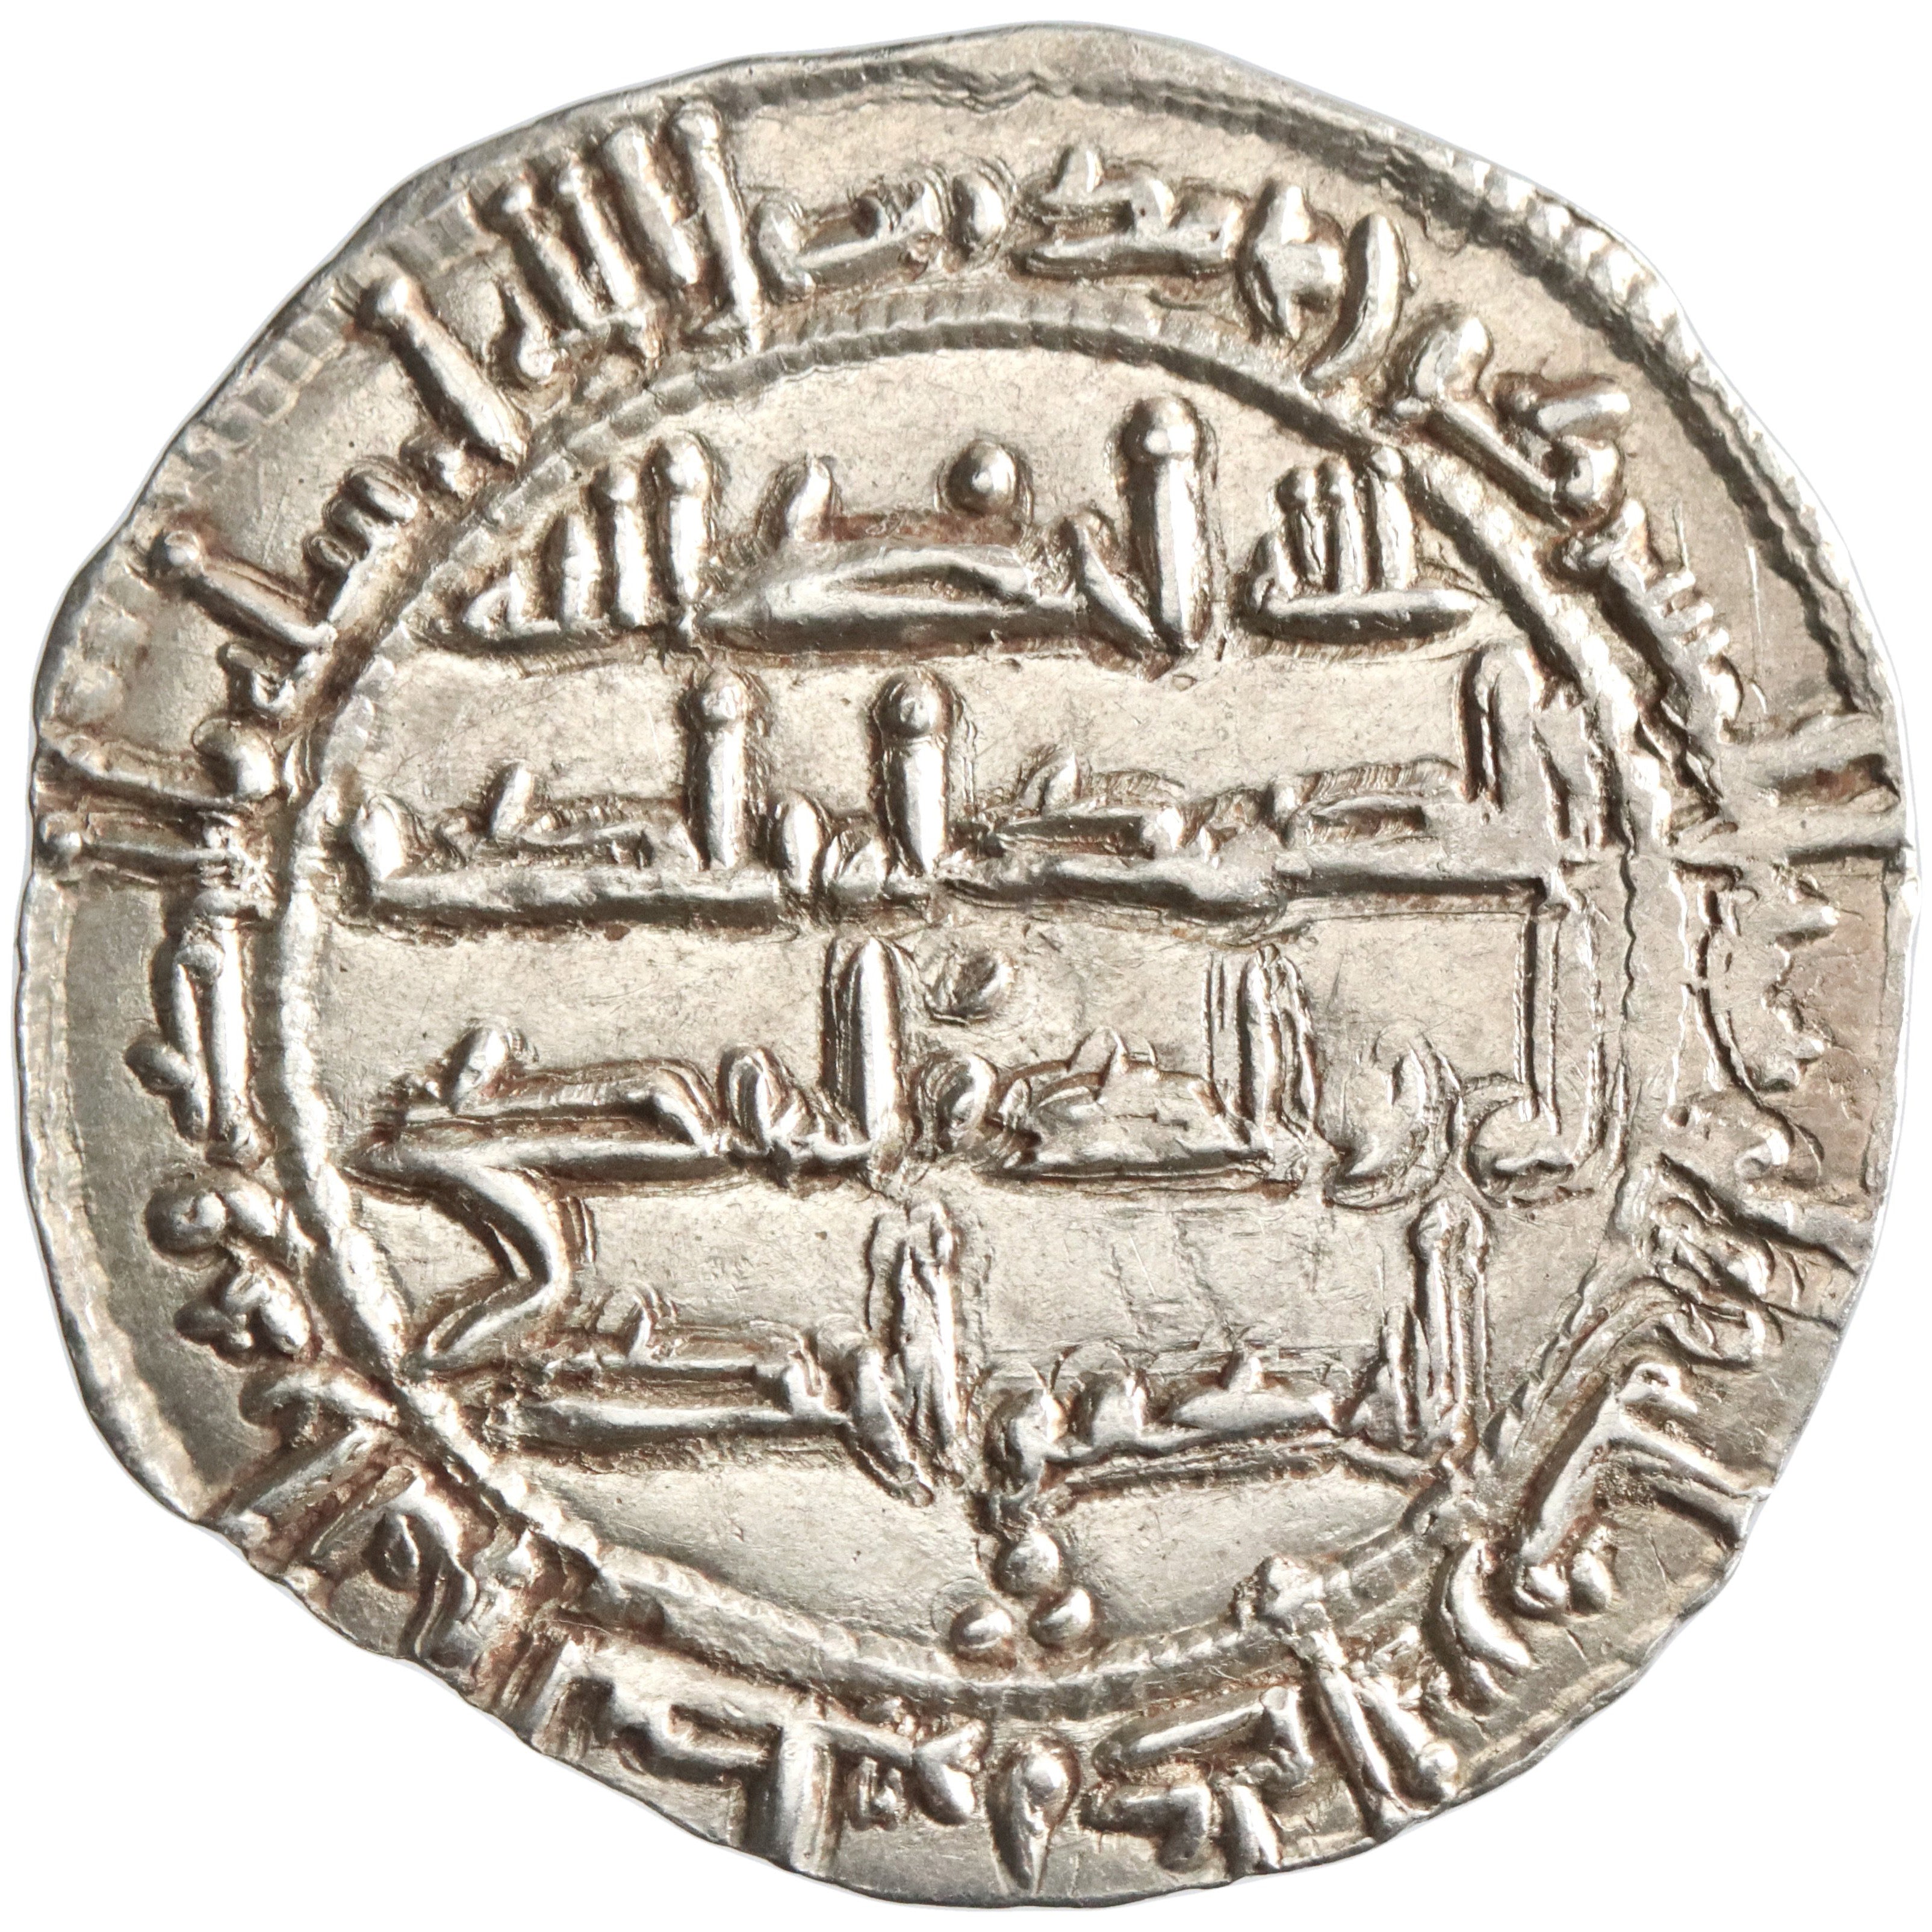 Umayyad of Spain, al-Hakam I, silver dirham, al-Andalus (Spain) mint, AH 197, crescent